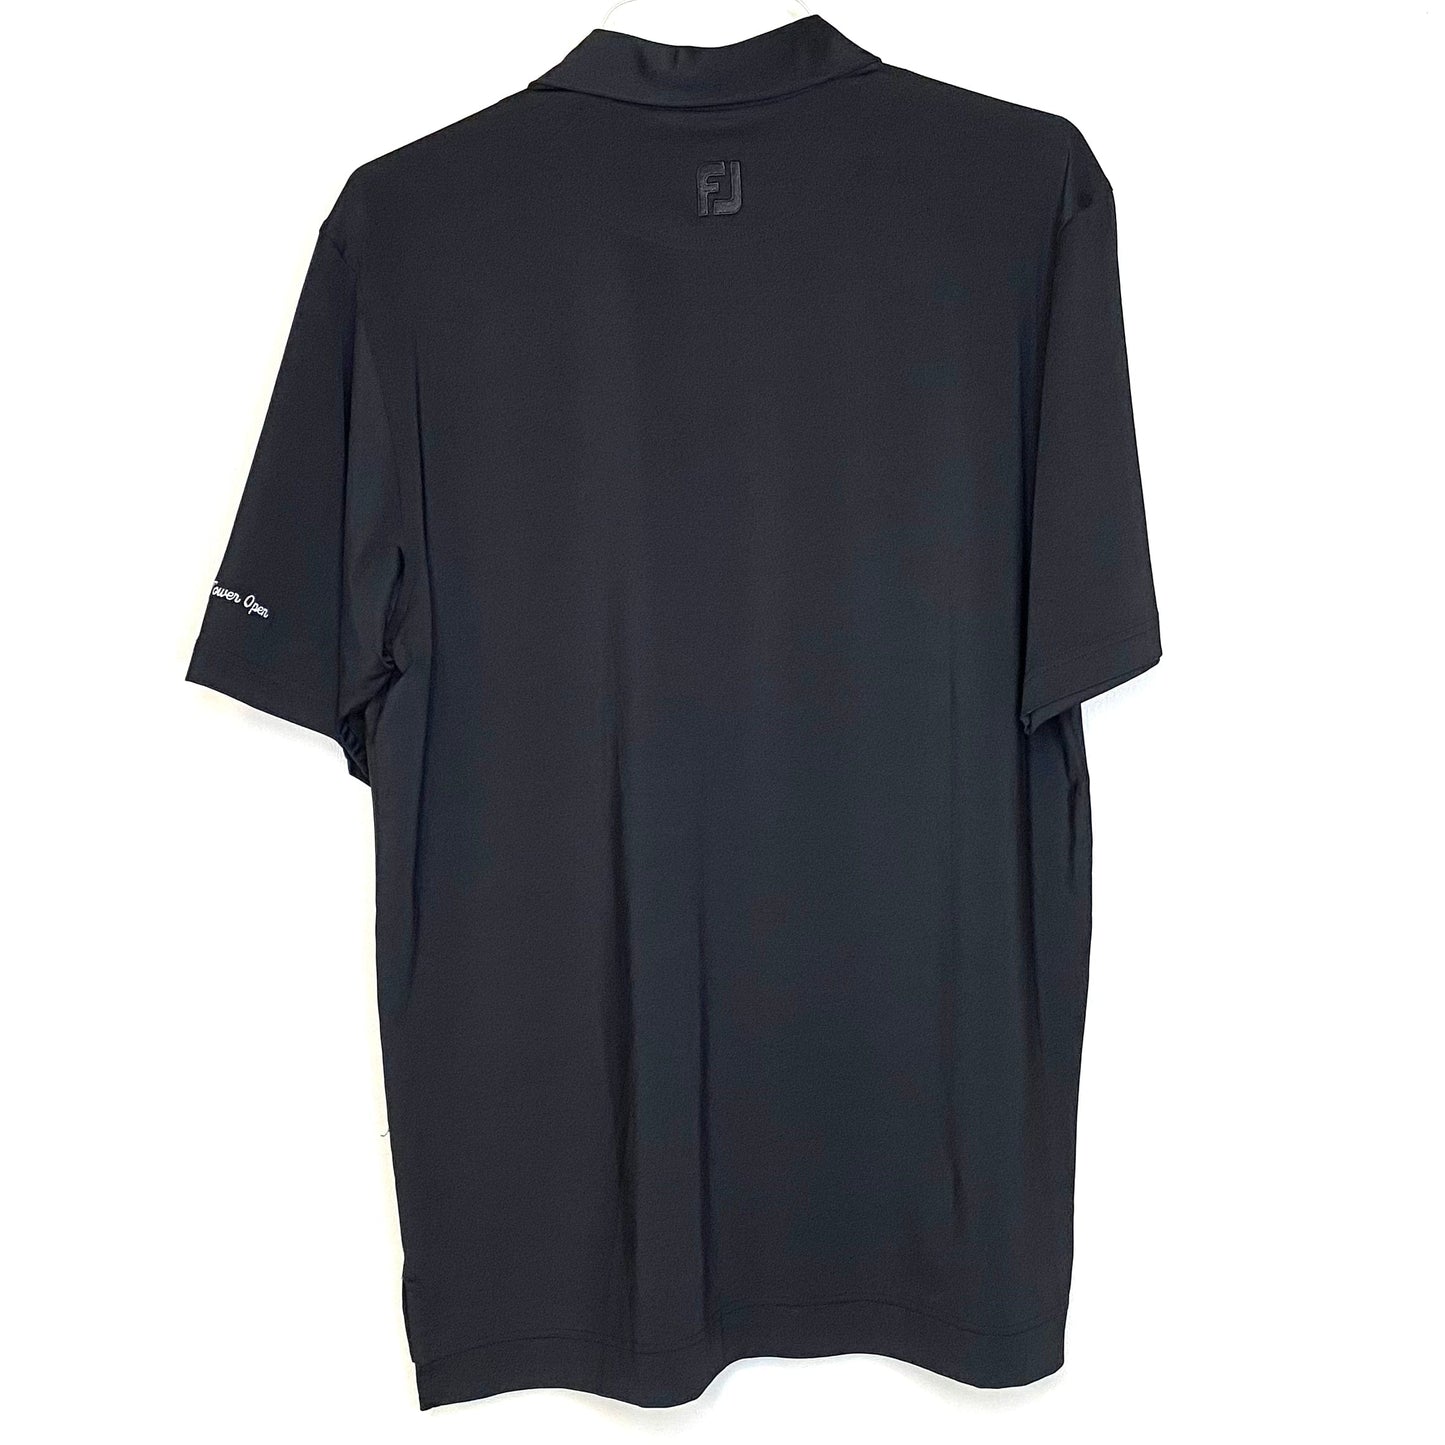 FootJoy Mens Size M Black Polo Golf Shirt “Happy State Bank” S/s